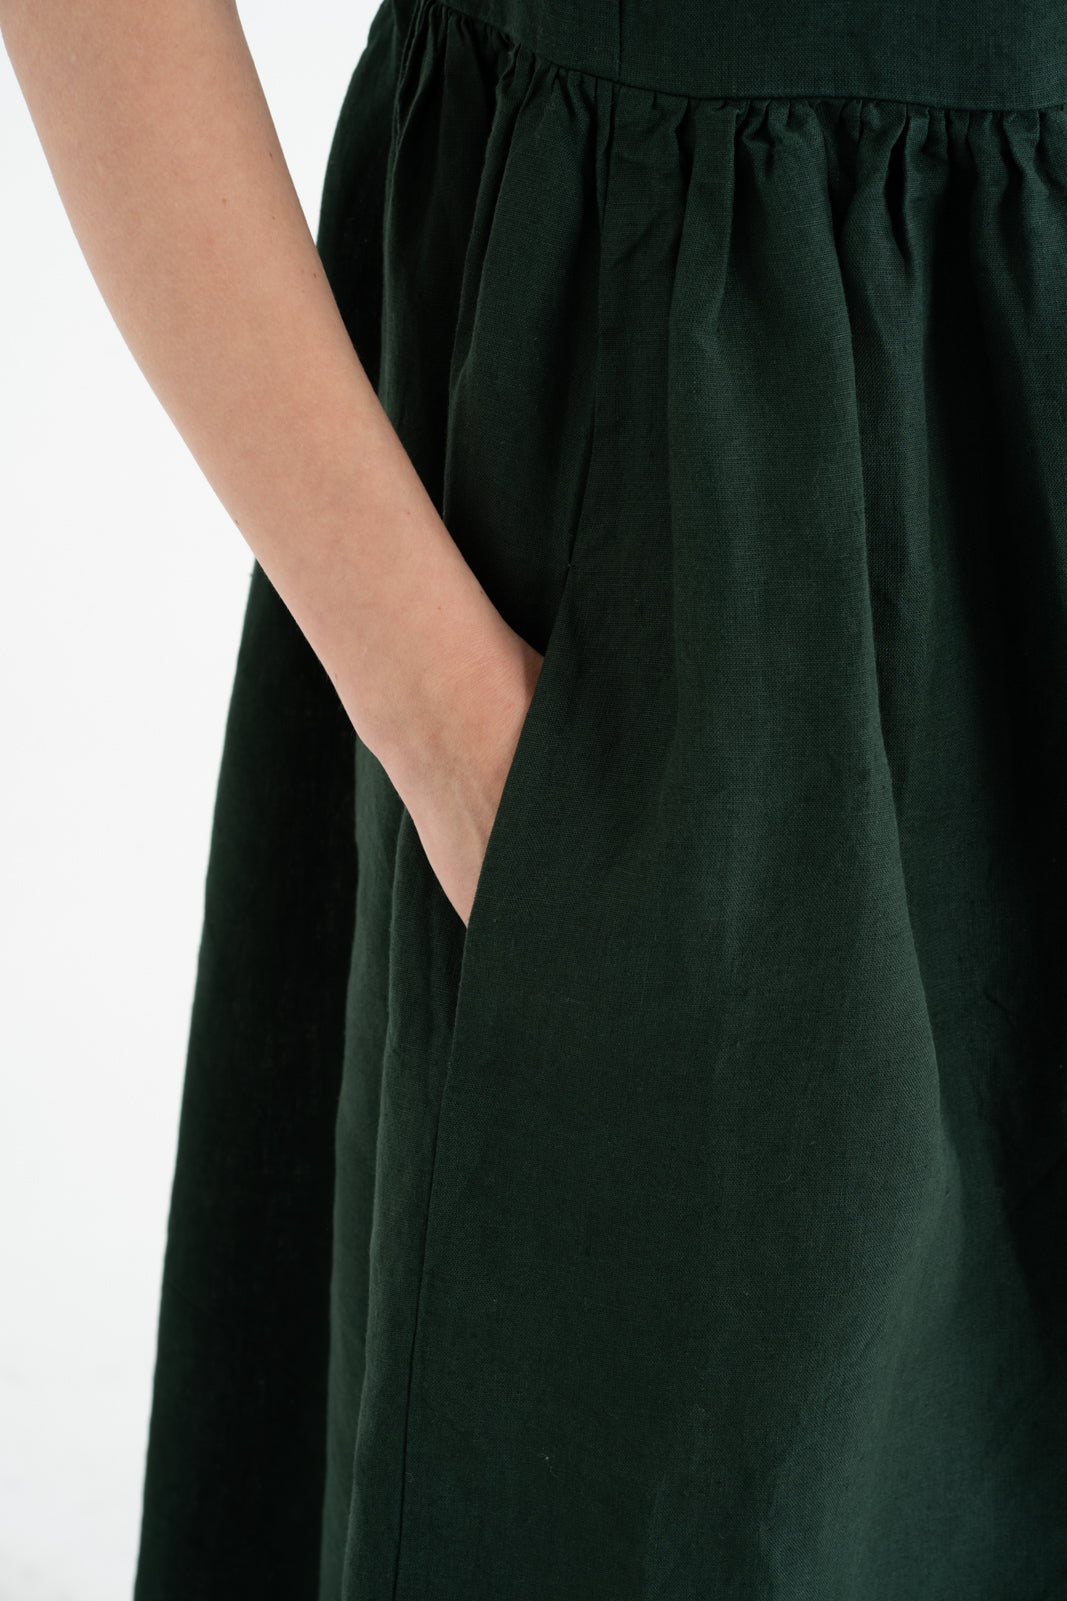 Smock Dress, Sleeveless#color_evergreen